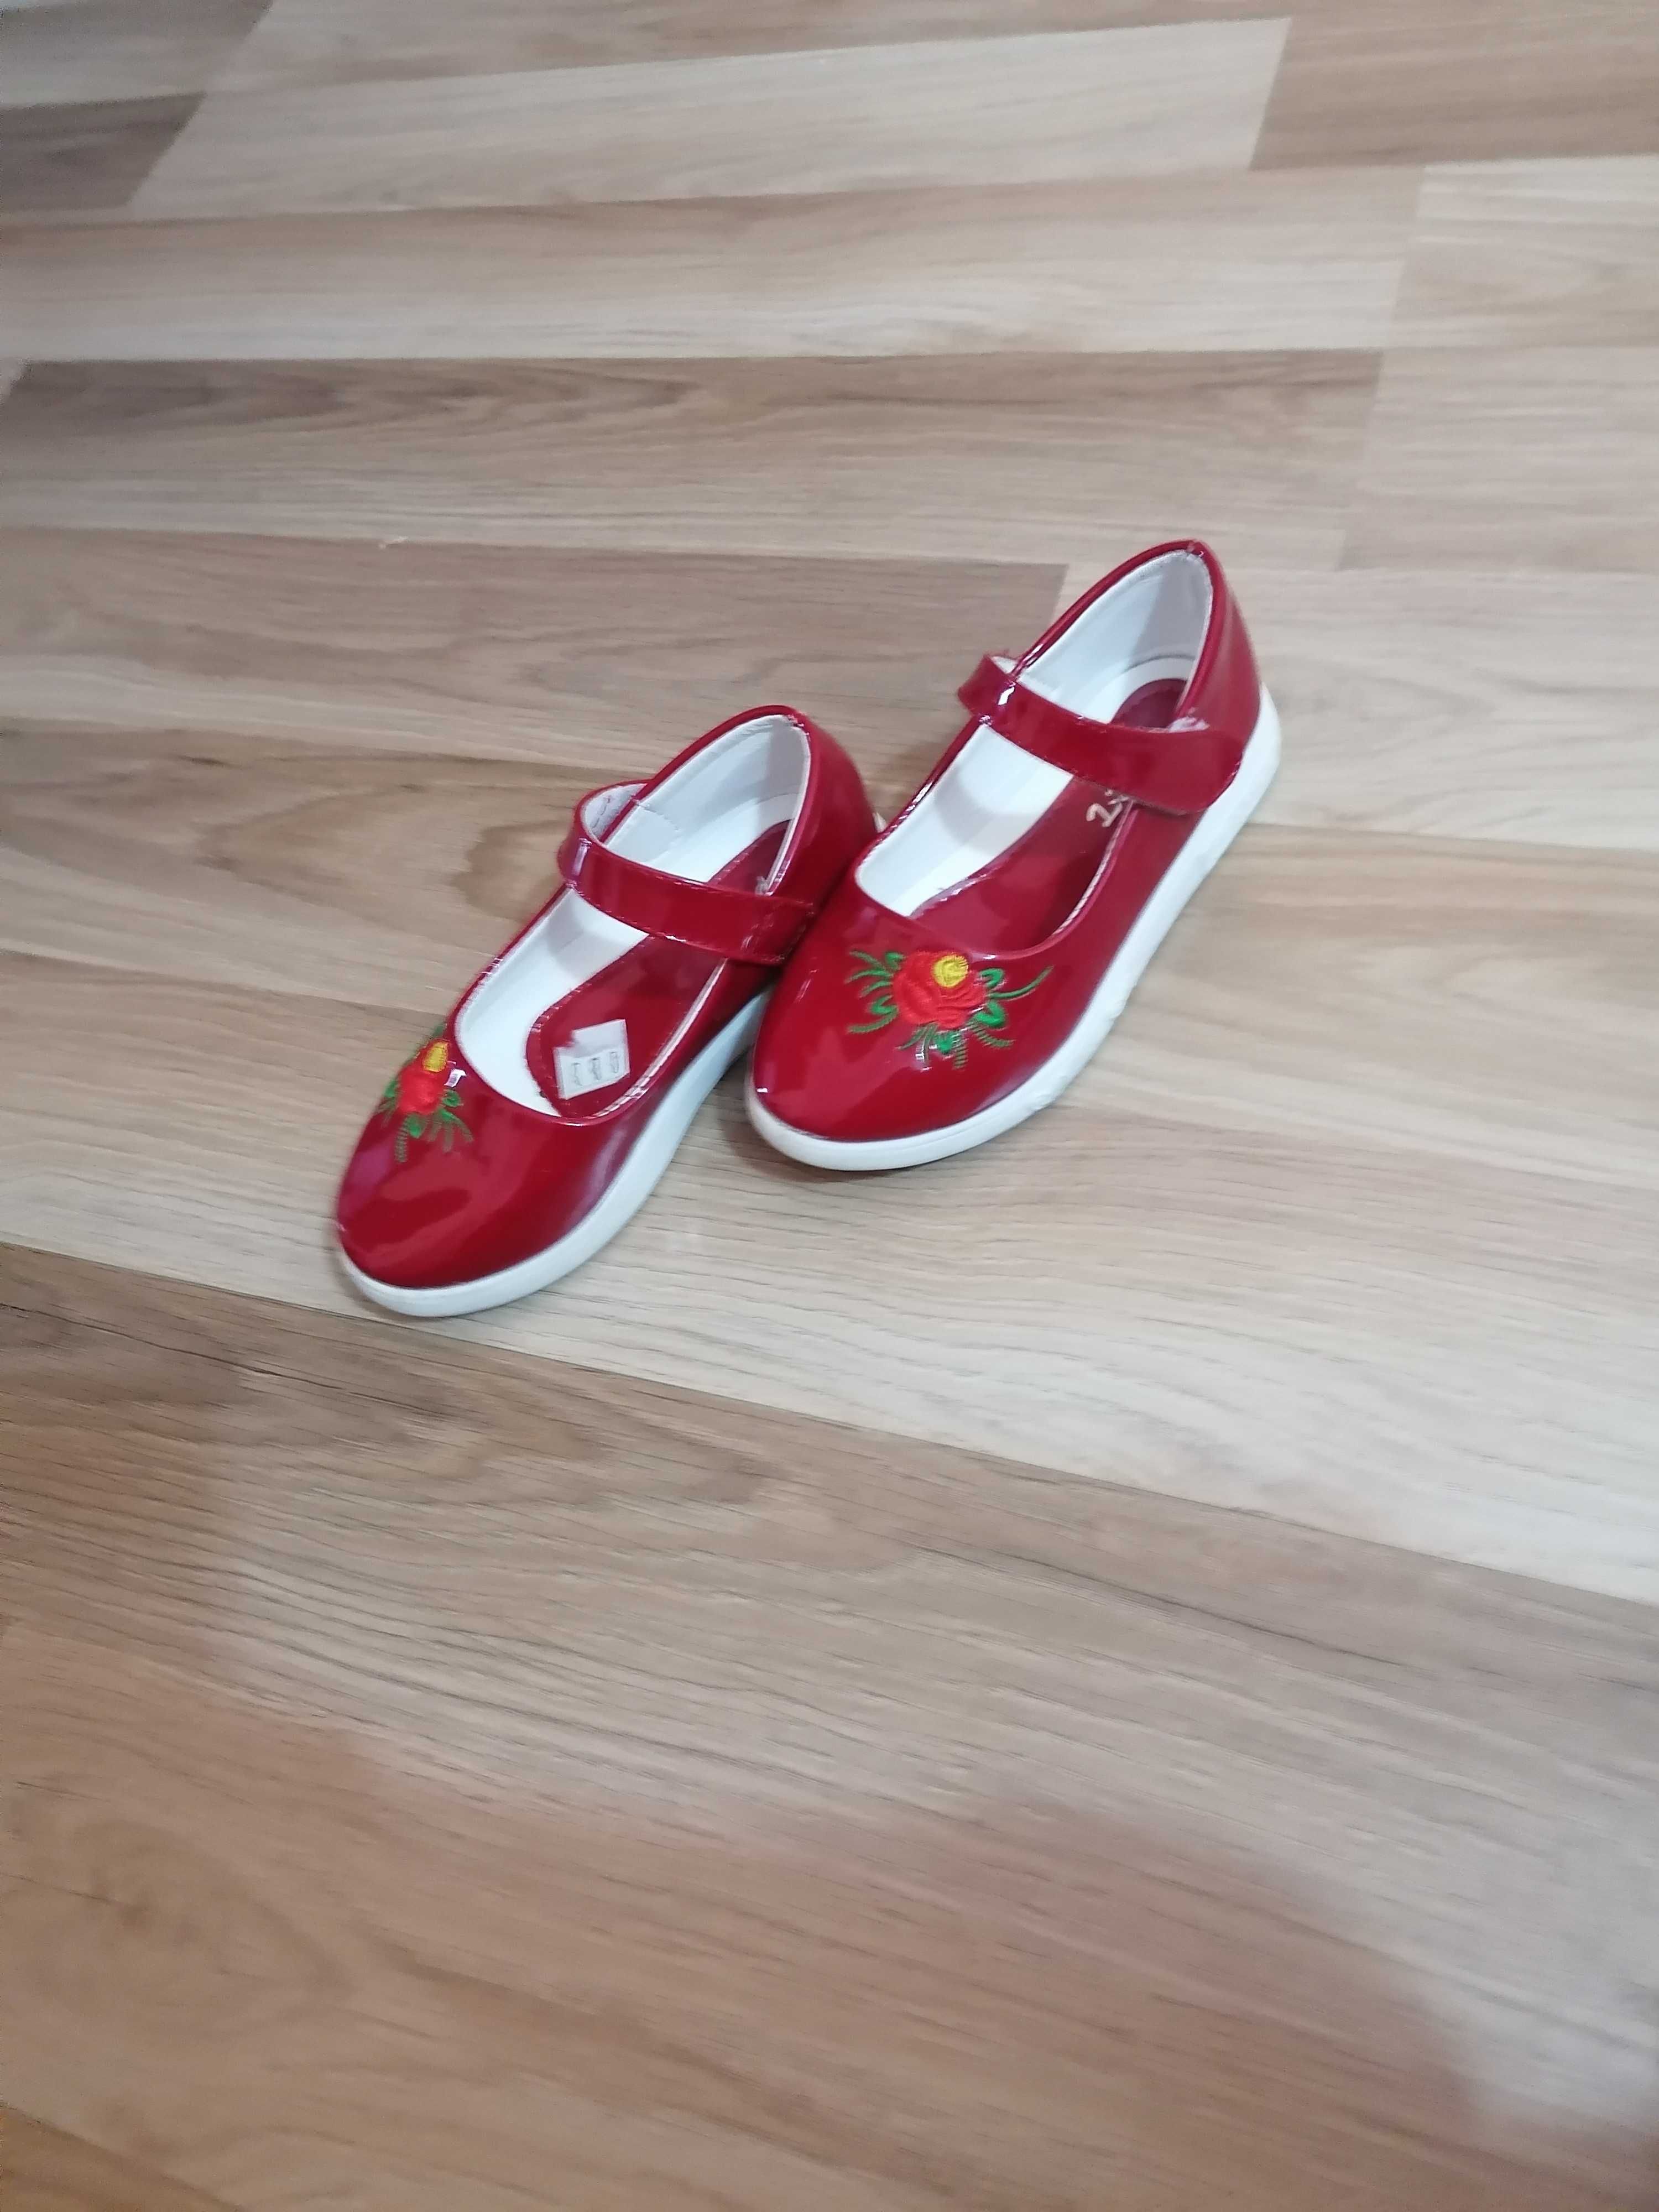 Pantofi rosii de lac fetite marime 30